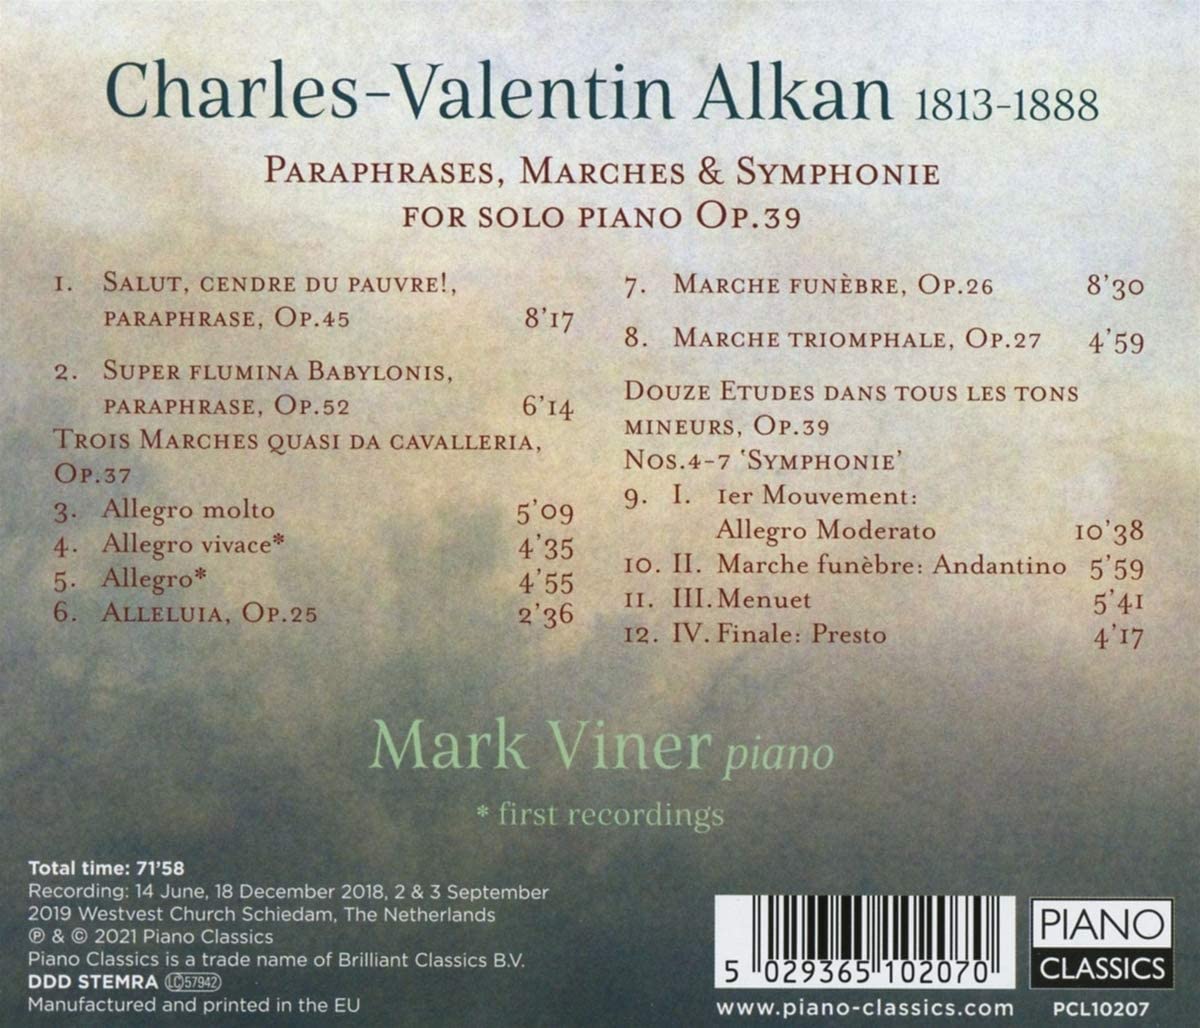 Mark Viner 알캉: 피아노 독주를 위한 교향곡과 행진곡 외 (Charles Alkan: Marches, Symphonie For Solo Piano Op.39) 